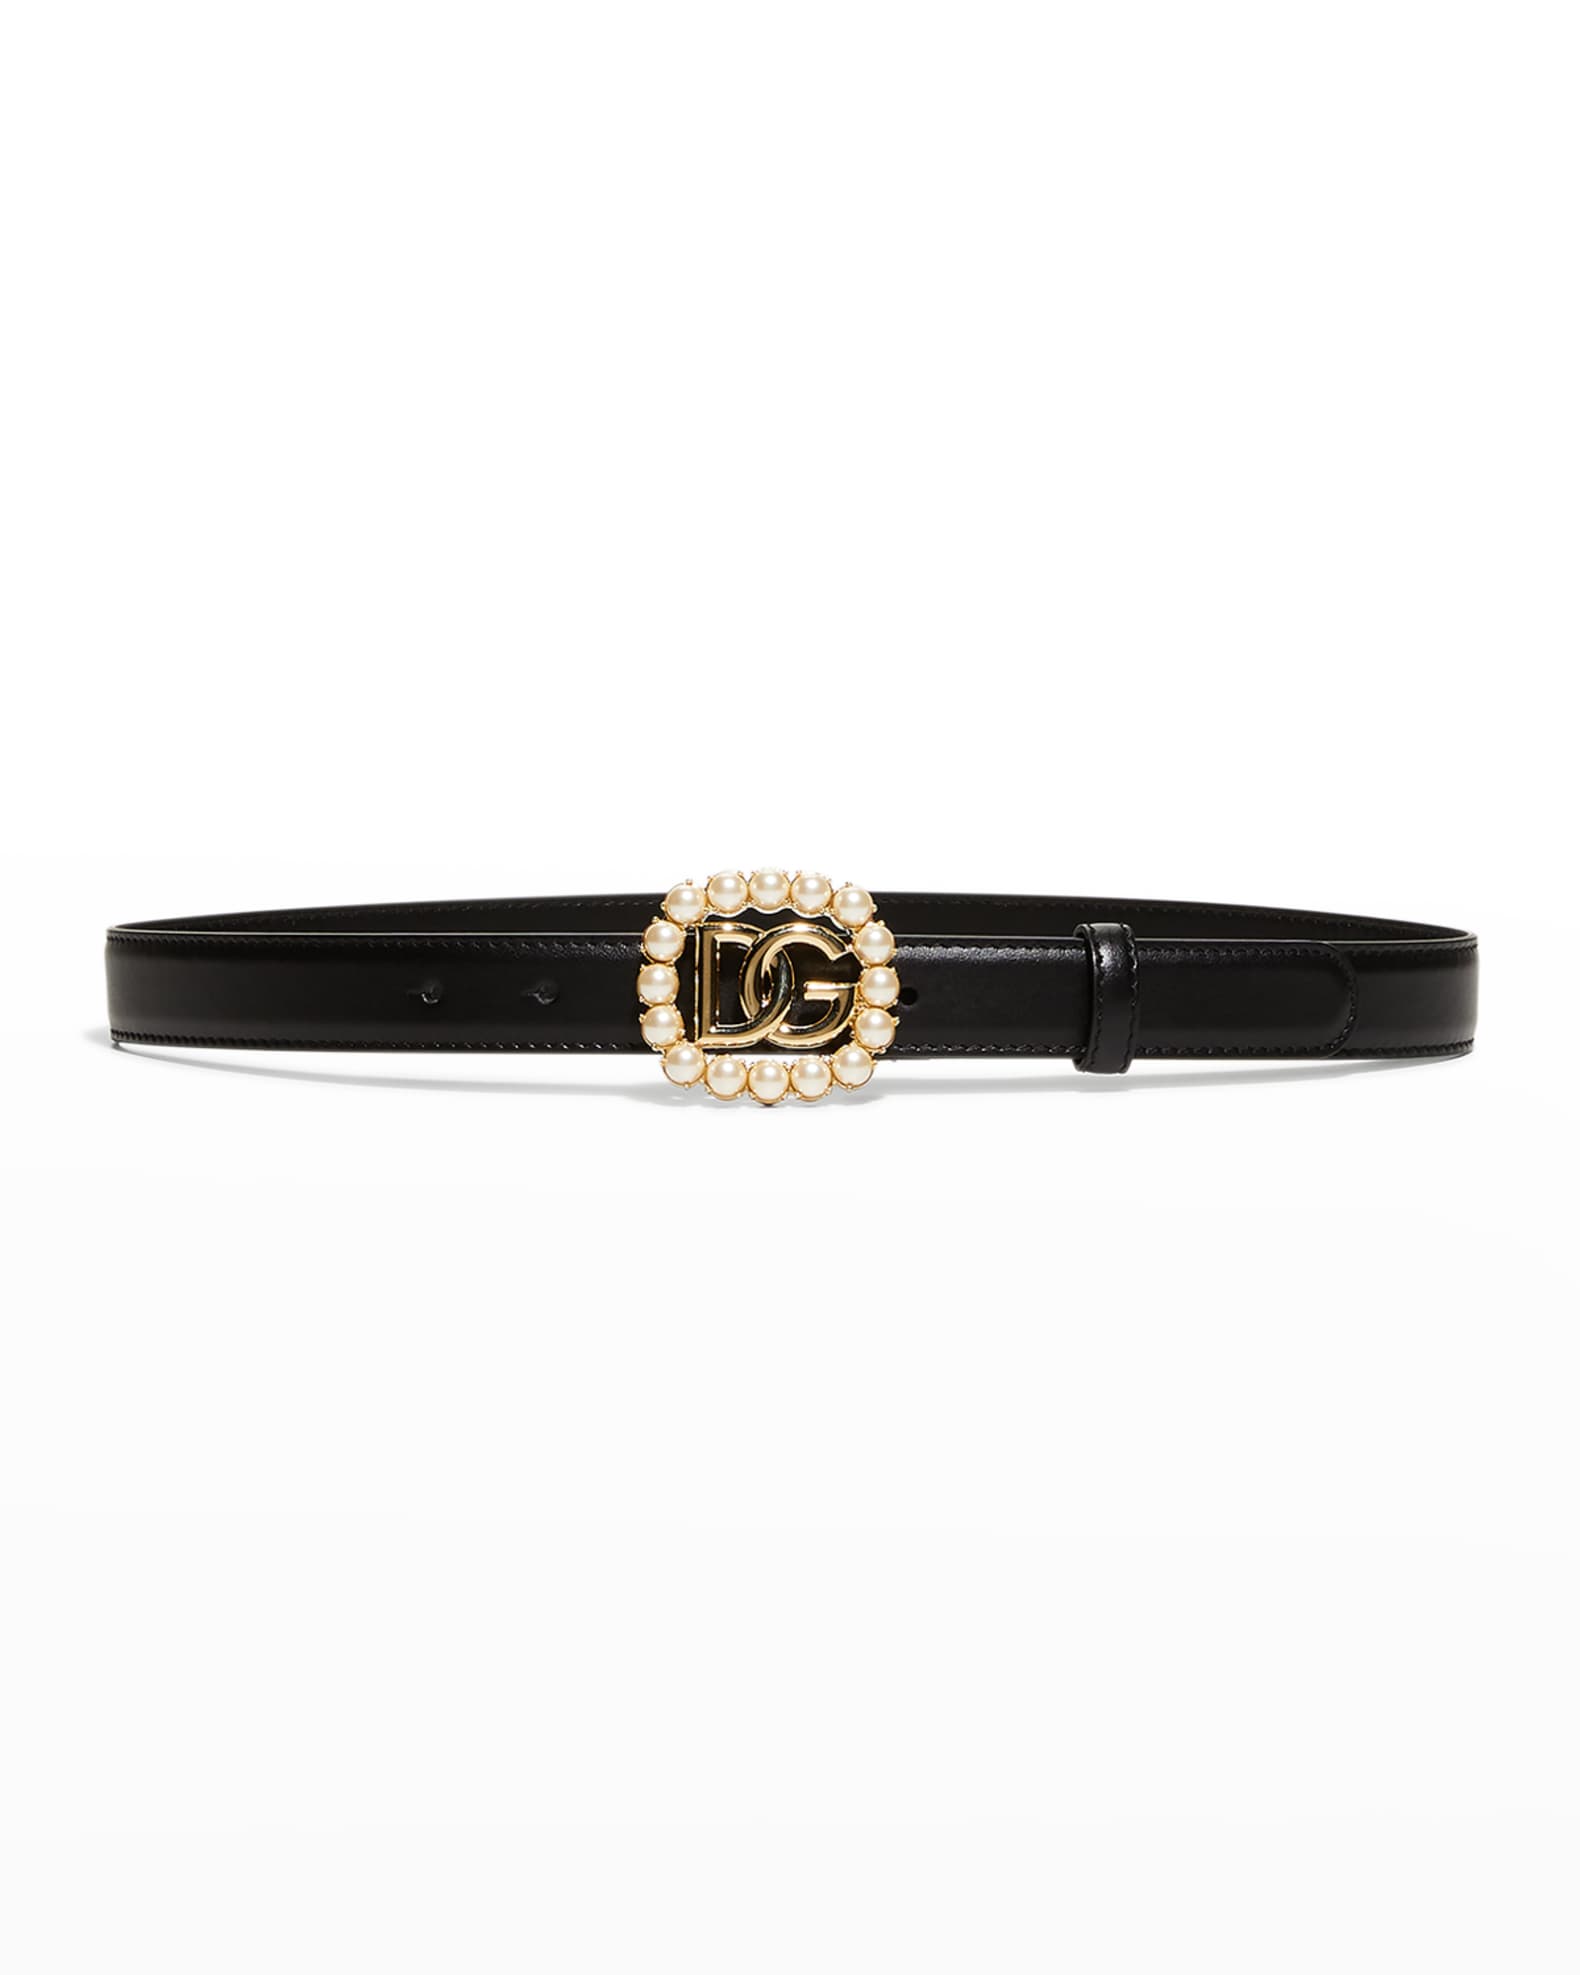 Dolce&Gabbana DG Logo Pearly Leather Belt | Neiman Marcus